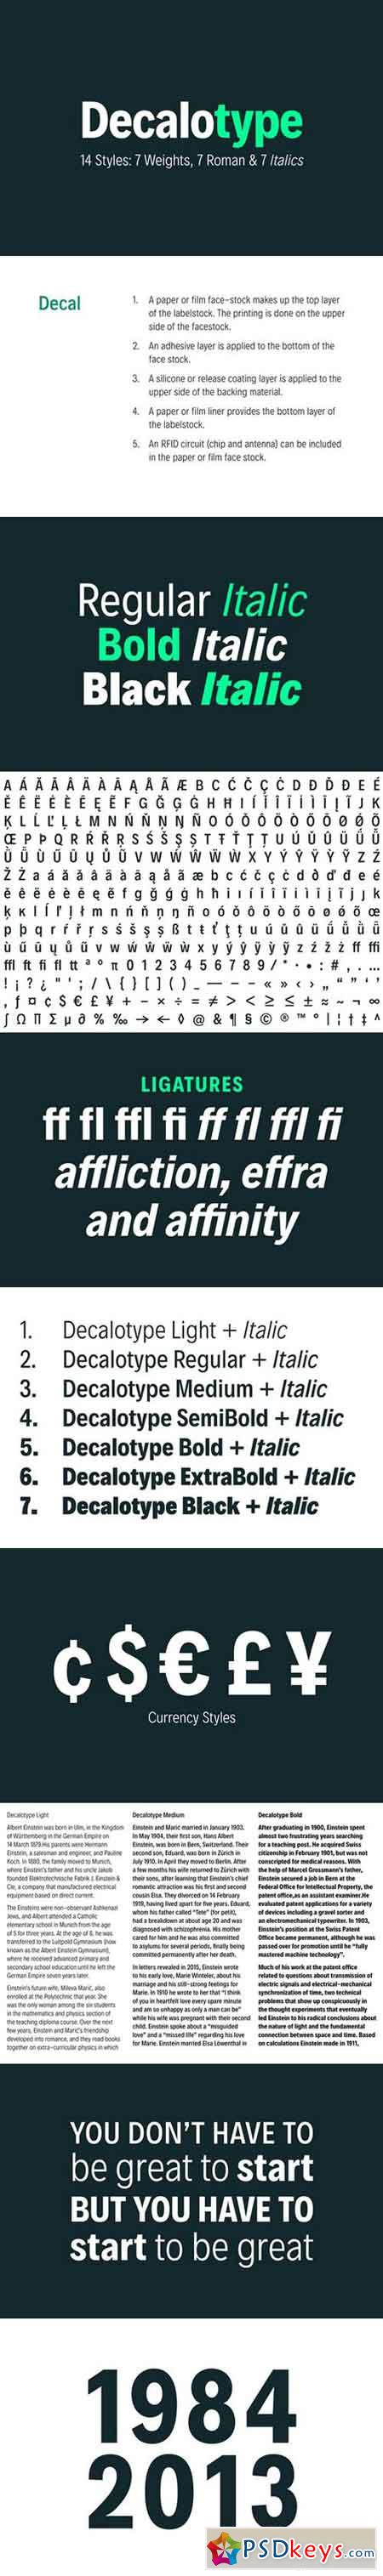 Decalotype Typeface